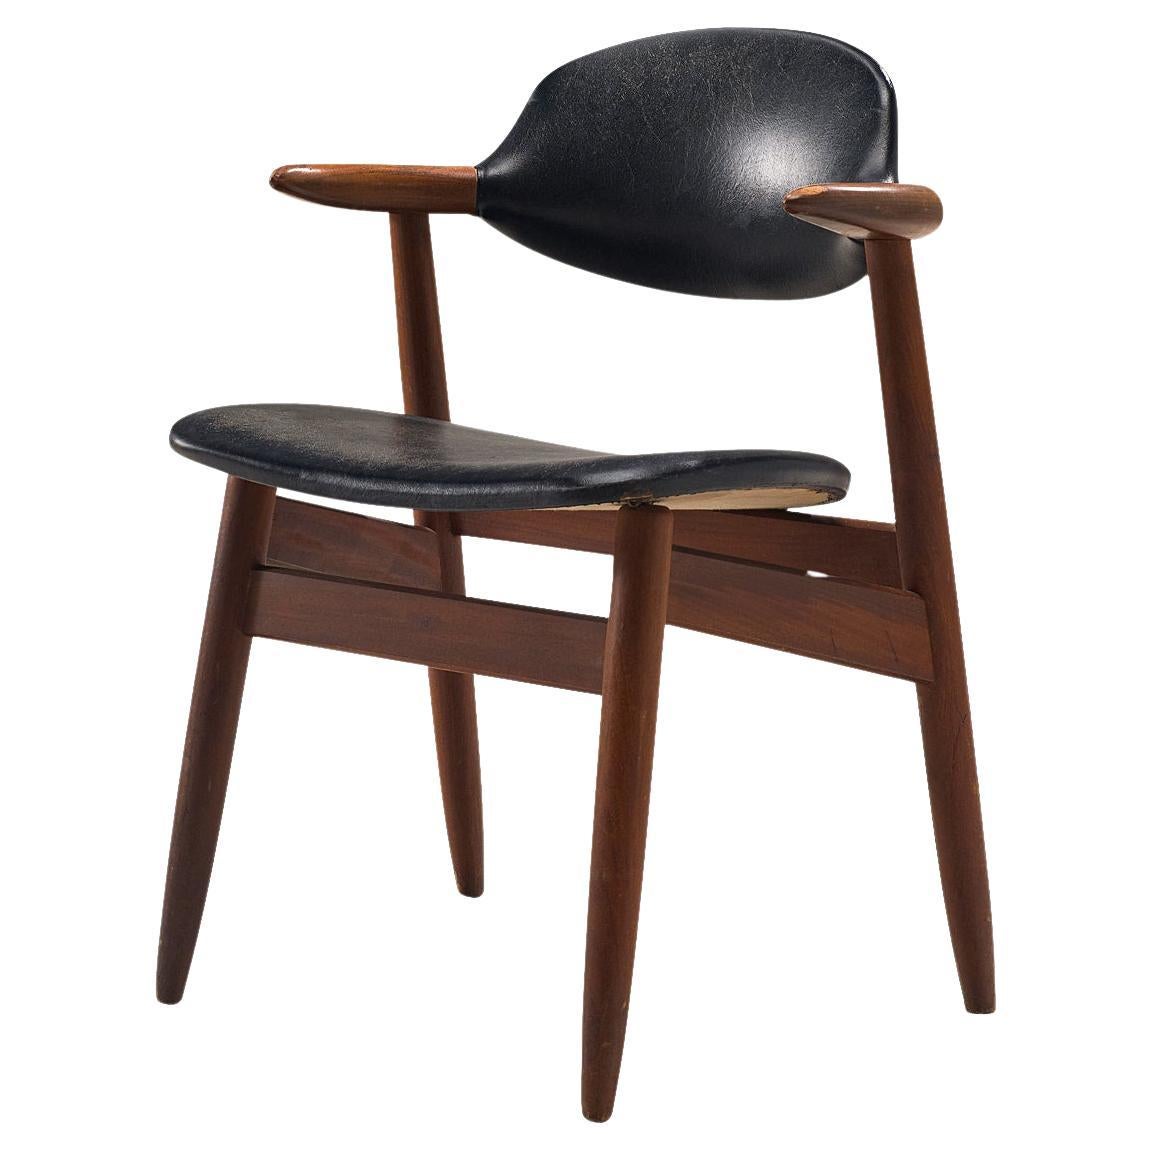 ‘Bullhorn’ Armchair in Teak and Black Upholstery 